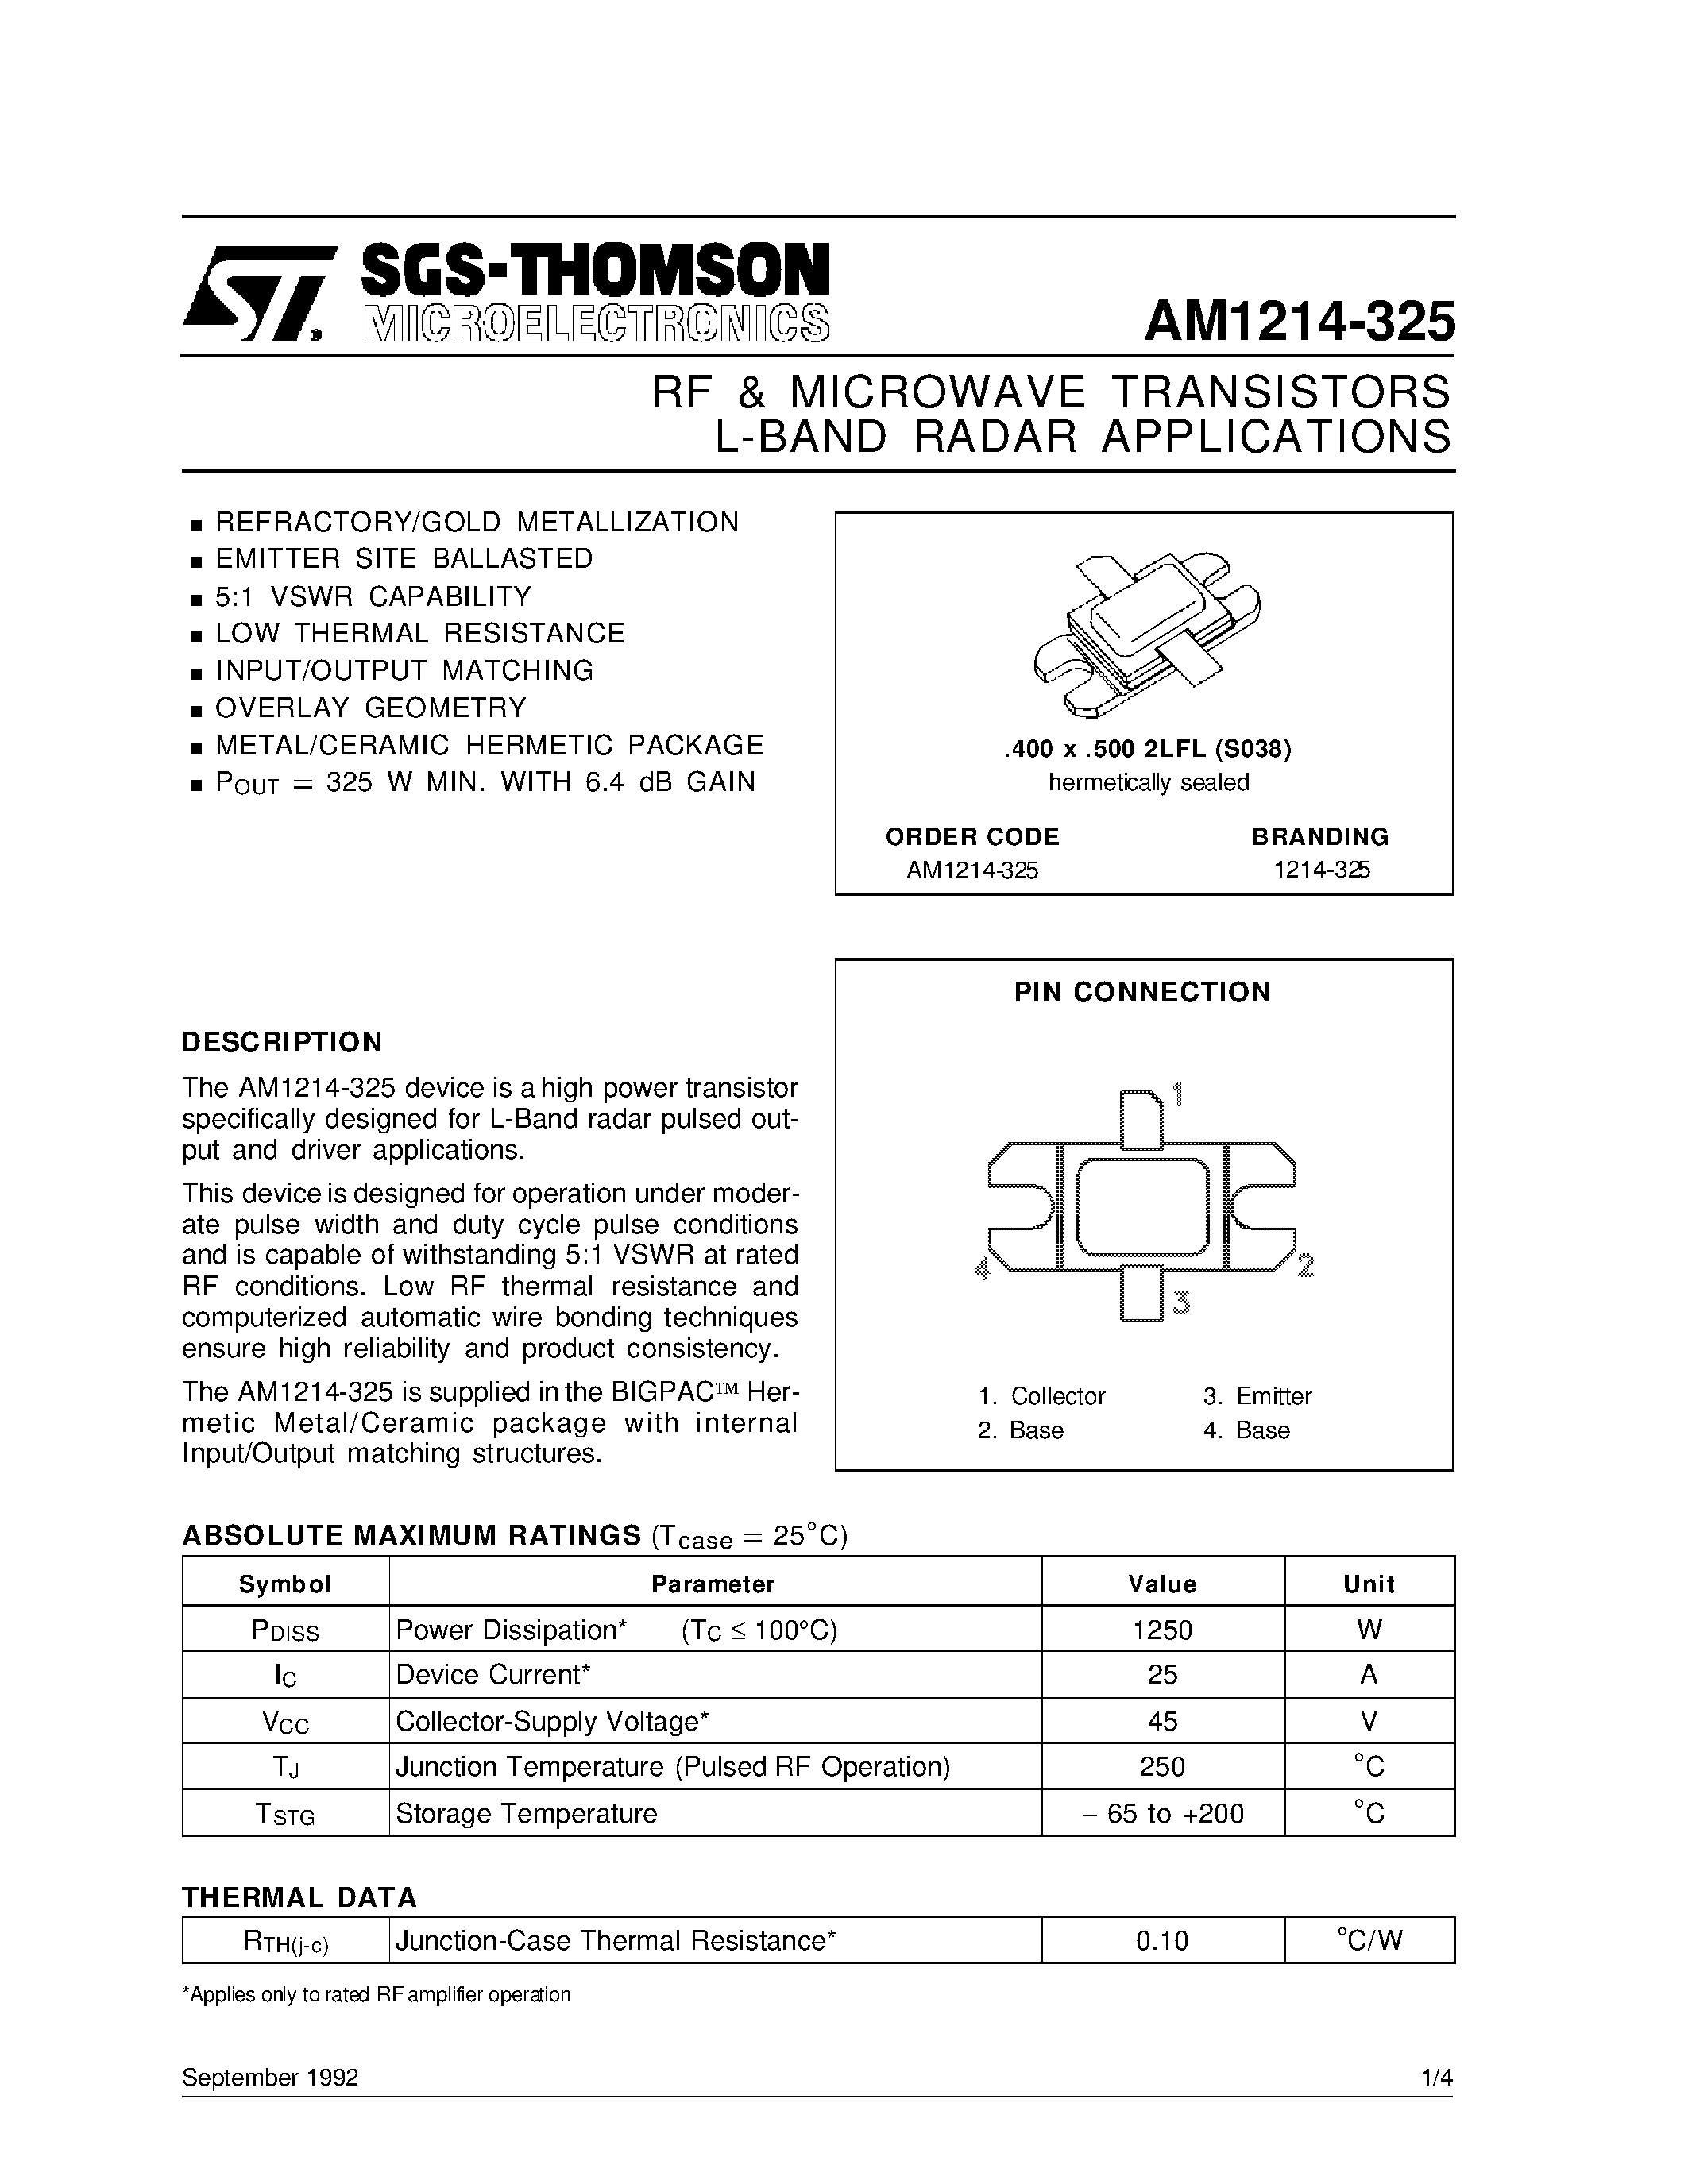 Datasheet AM1214-325 - L-BAND RADAR APPLICATIONS RF & MICROWAVE TRANSISTORS page 1